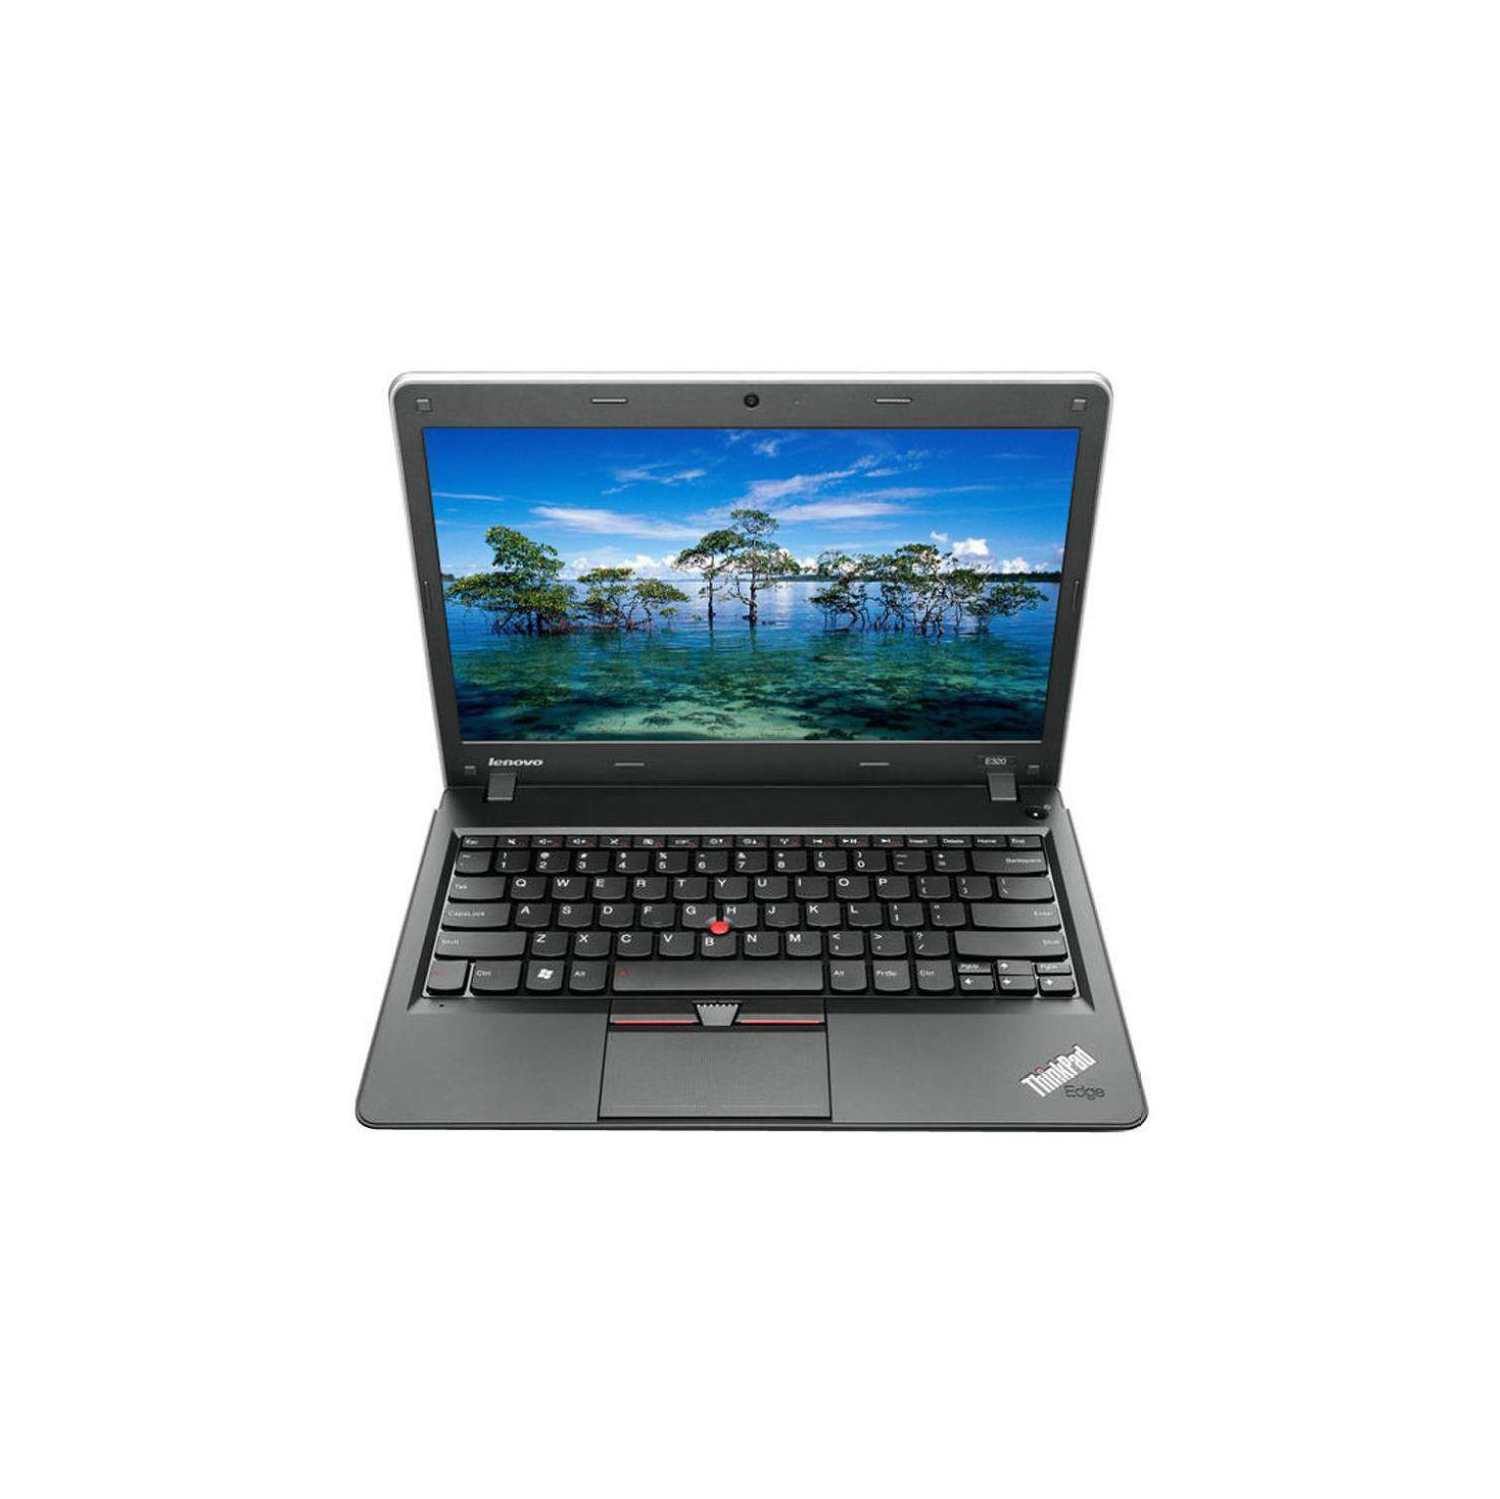 Refurbished (Good) - Lenovo Thinkpad E450 Notebook, Intel Core i7